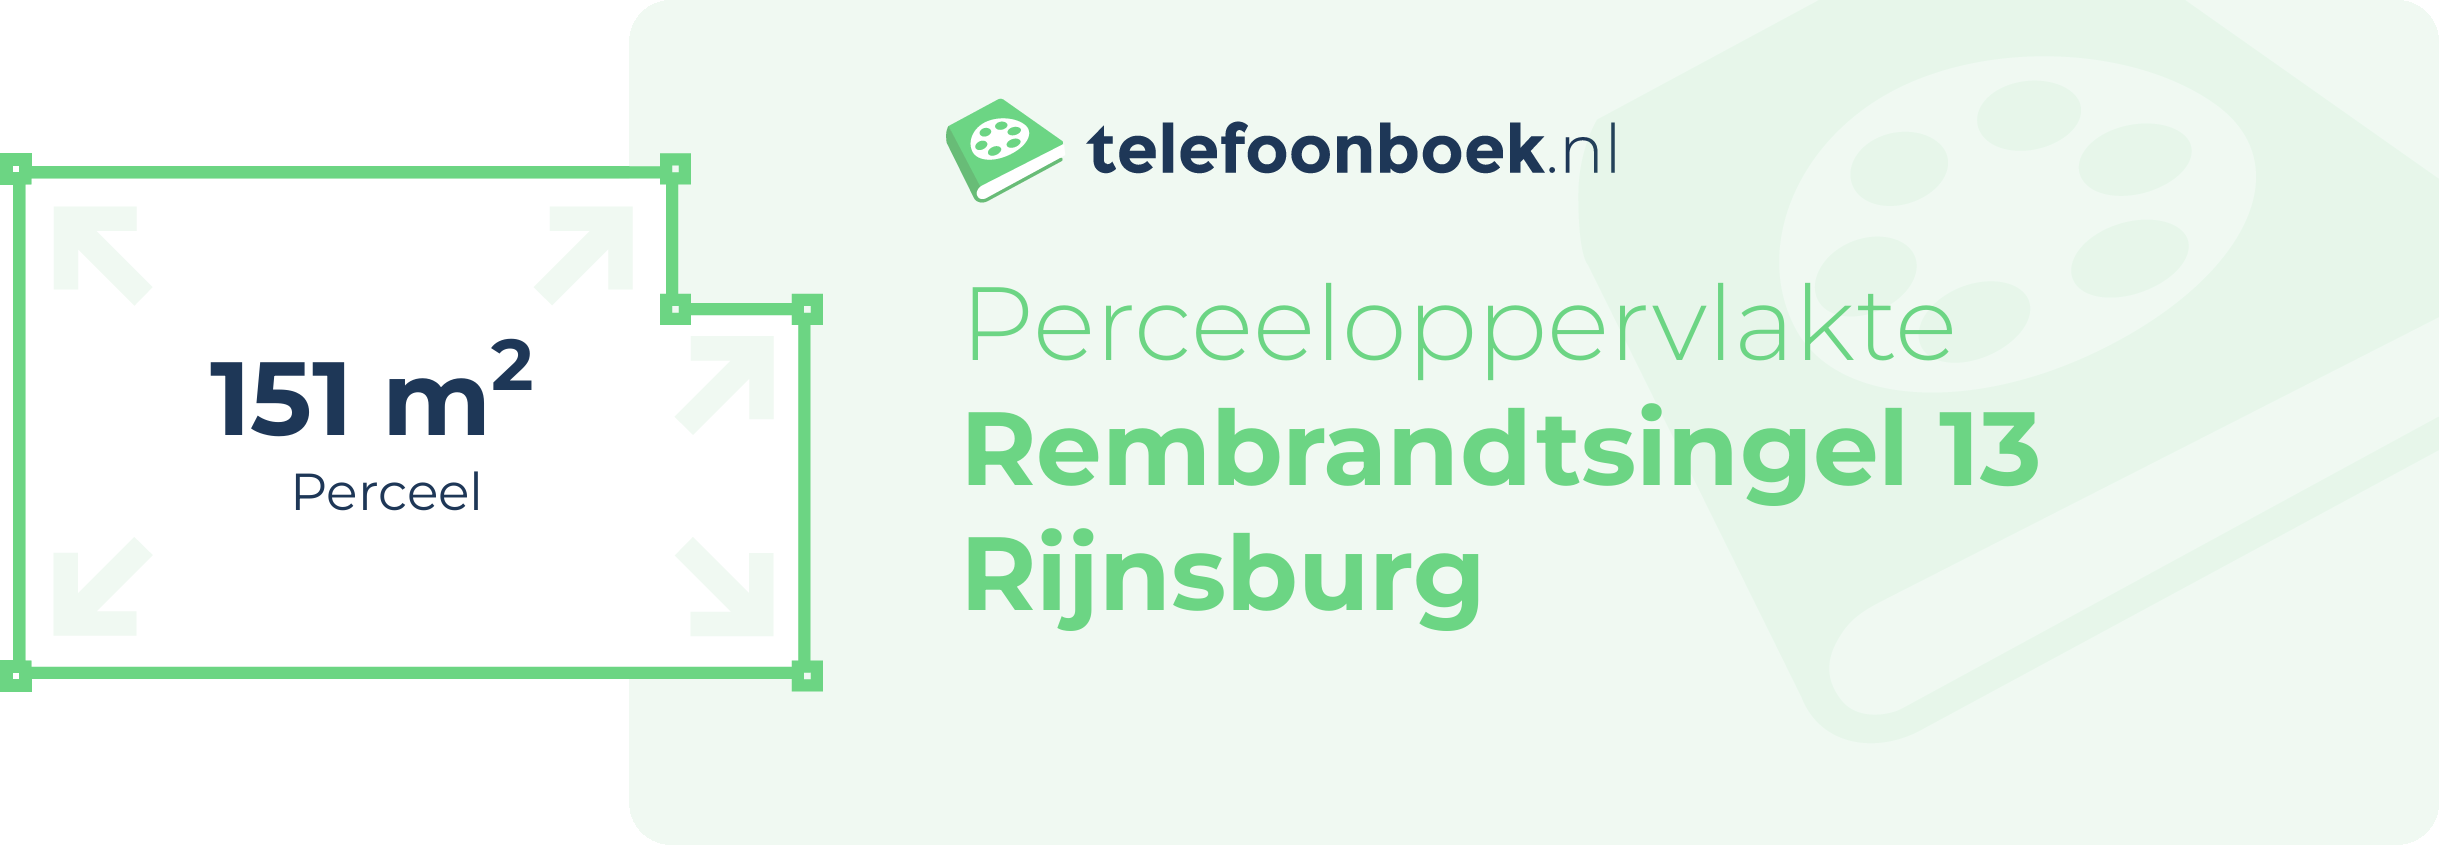 Perceeloppervlakte Rembrandtsingel 13 Rijnsburg